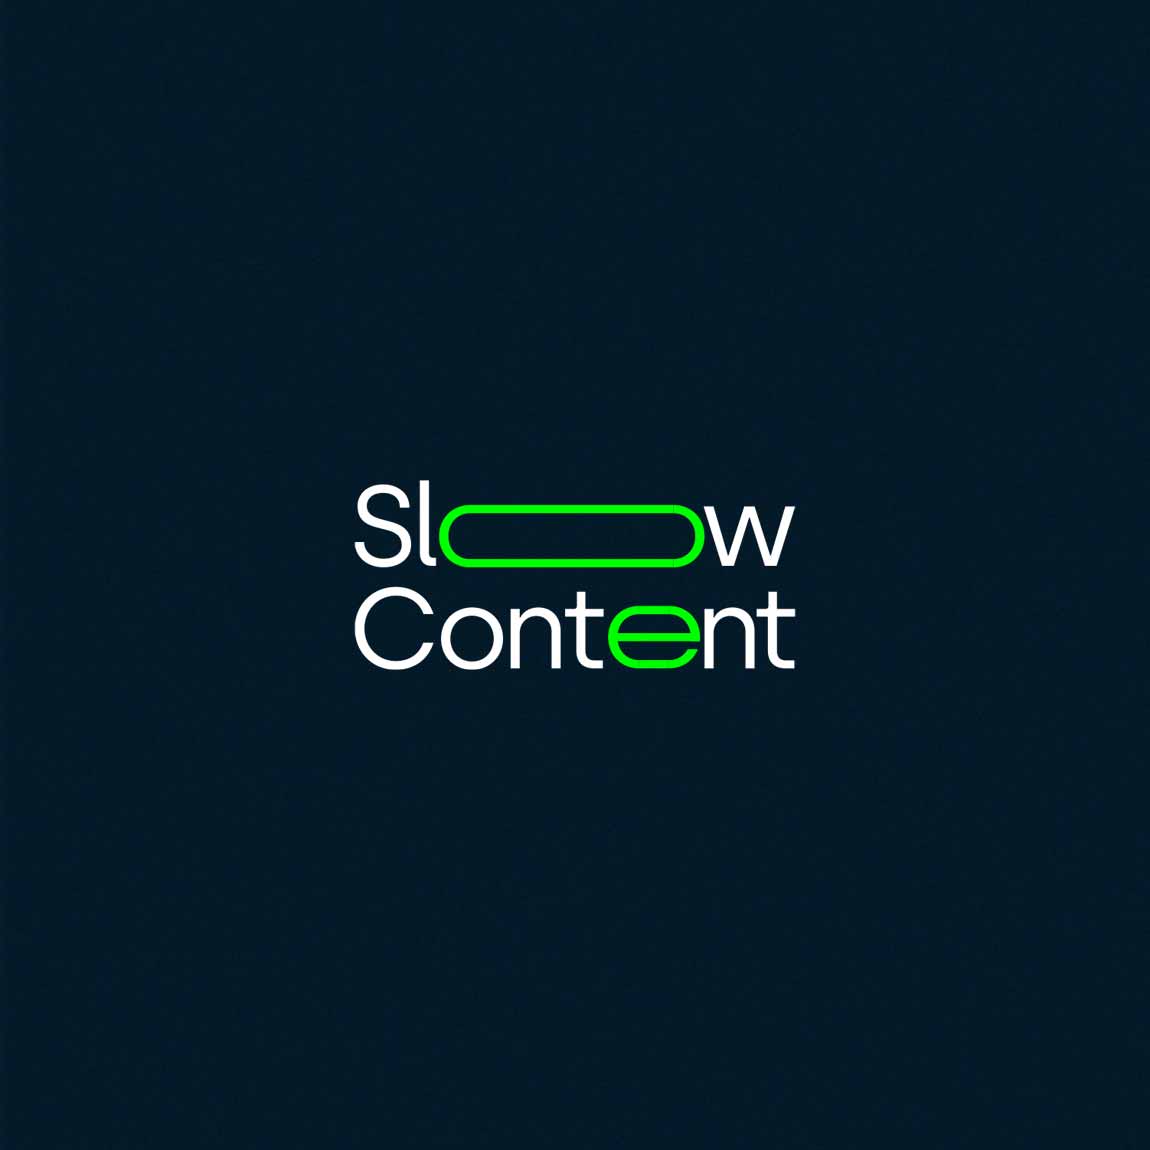 Slow Content